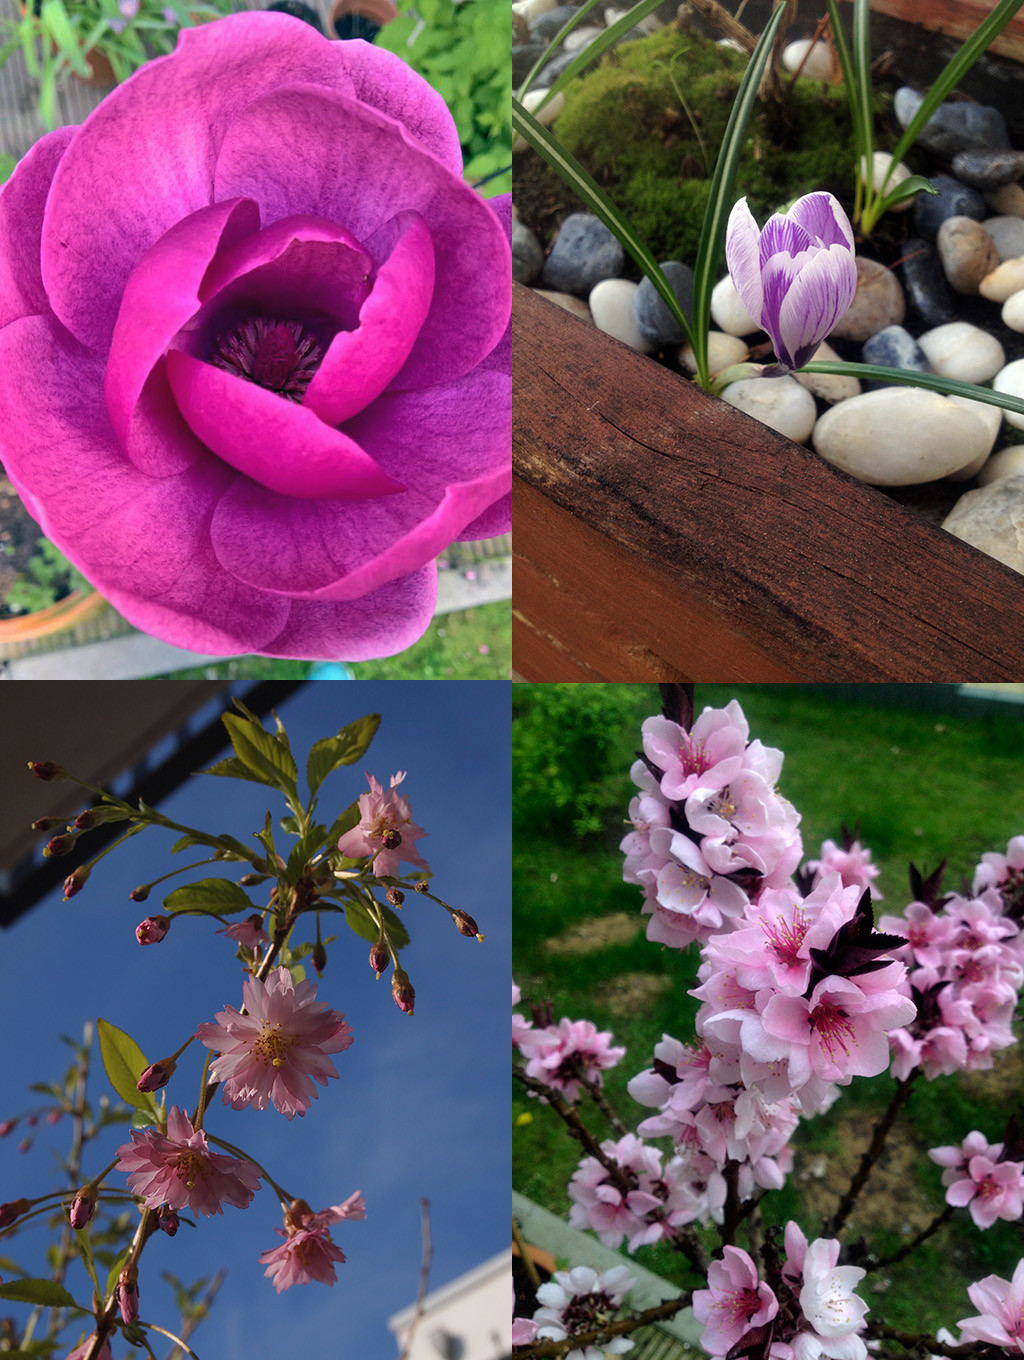 Joint flower power (ltr, ttb): Magnolia "Black Tulip", Crocus, Cherry "Fukubana", Peach